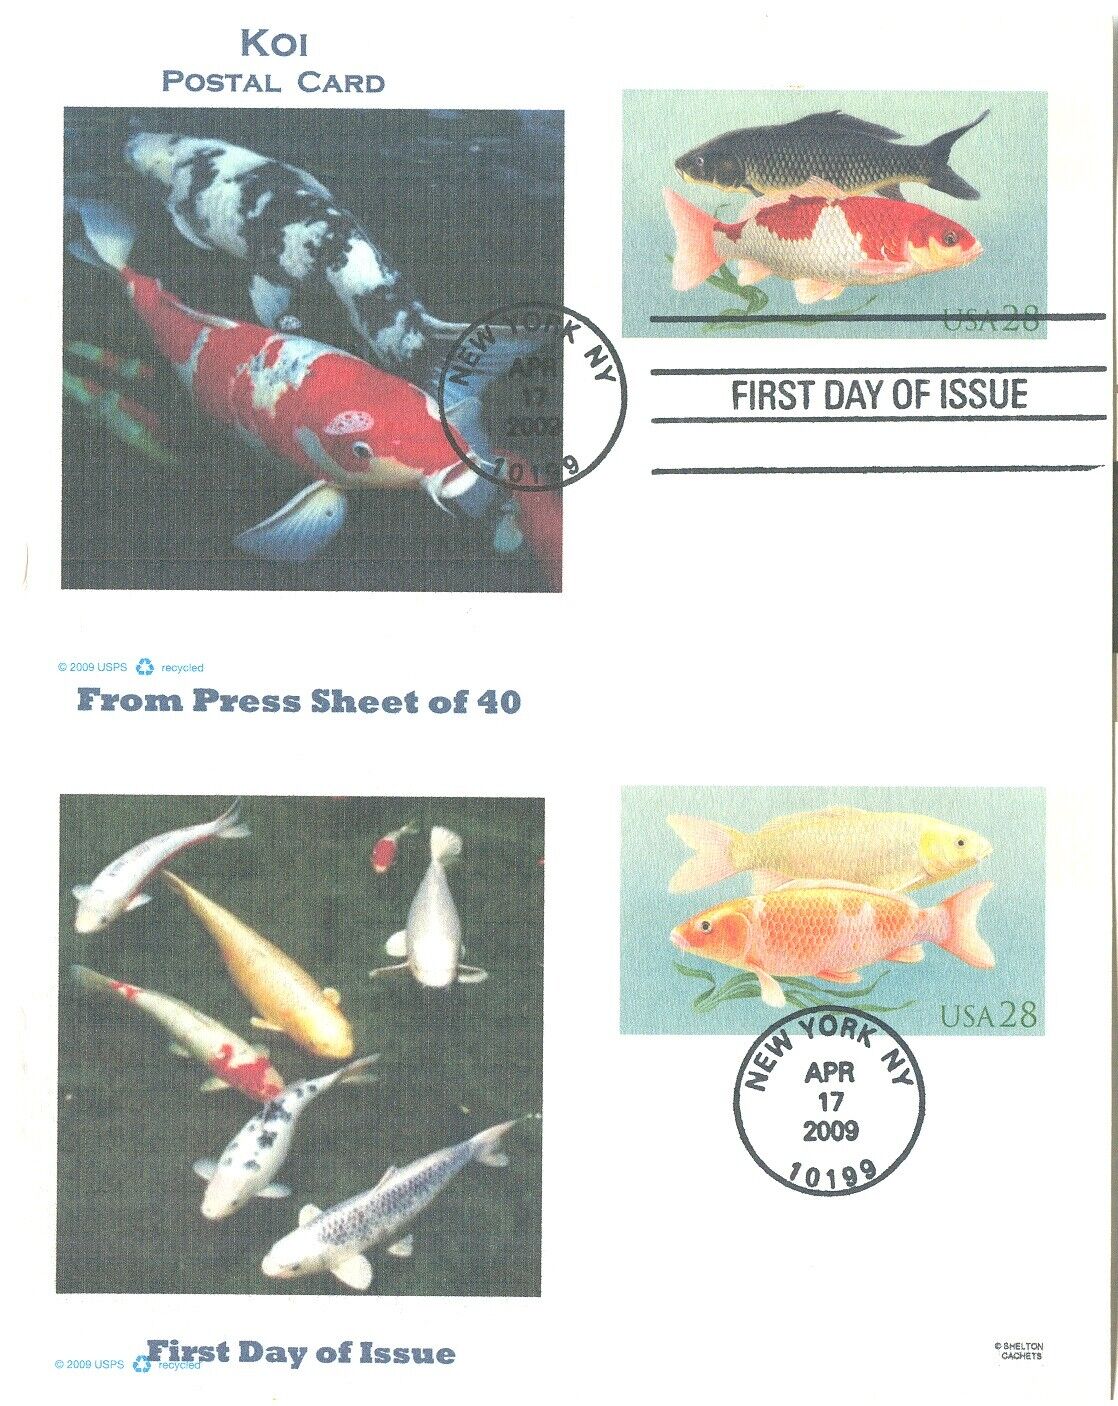 2009 Koi Postal Card Fdc From Printer Press Sheet Of 40 - Ux556a